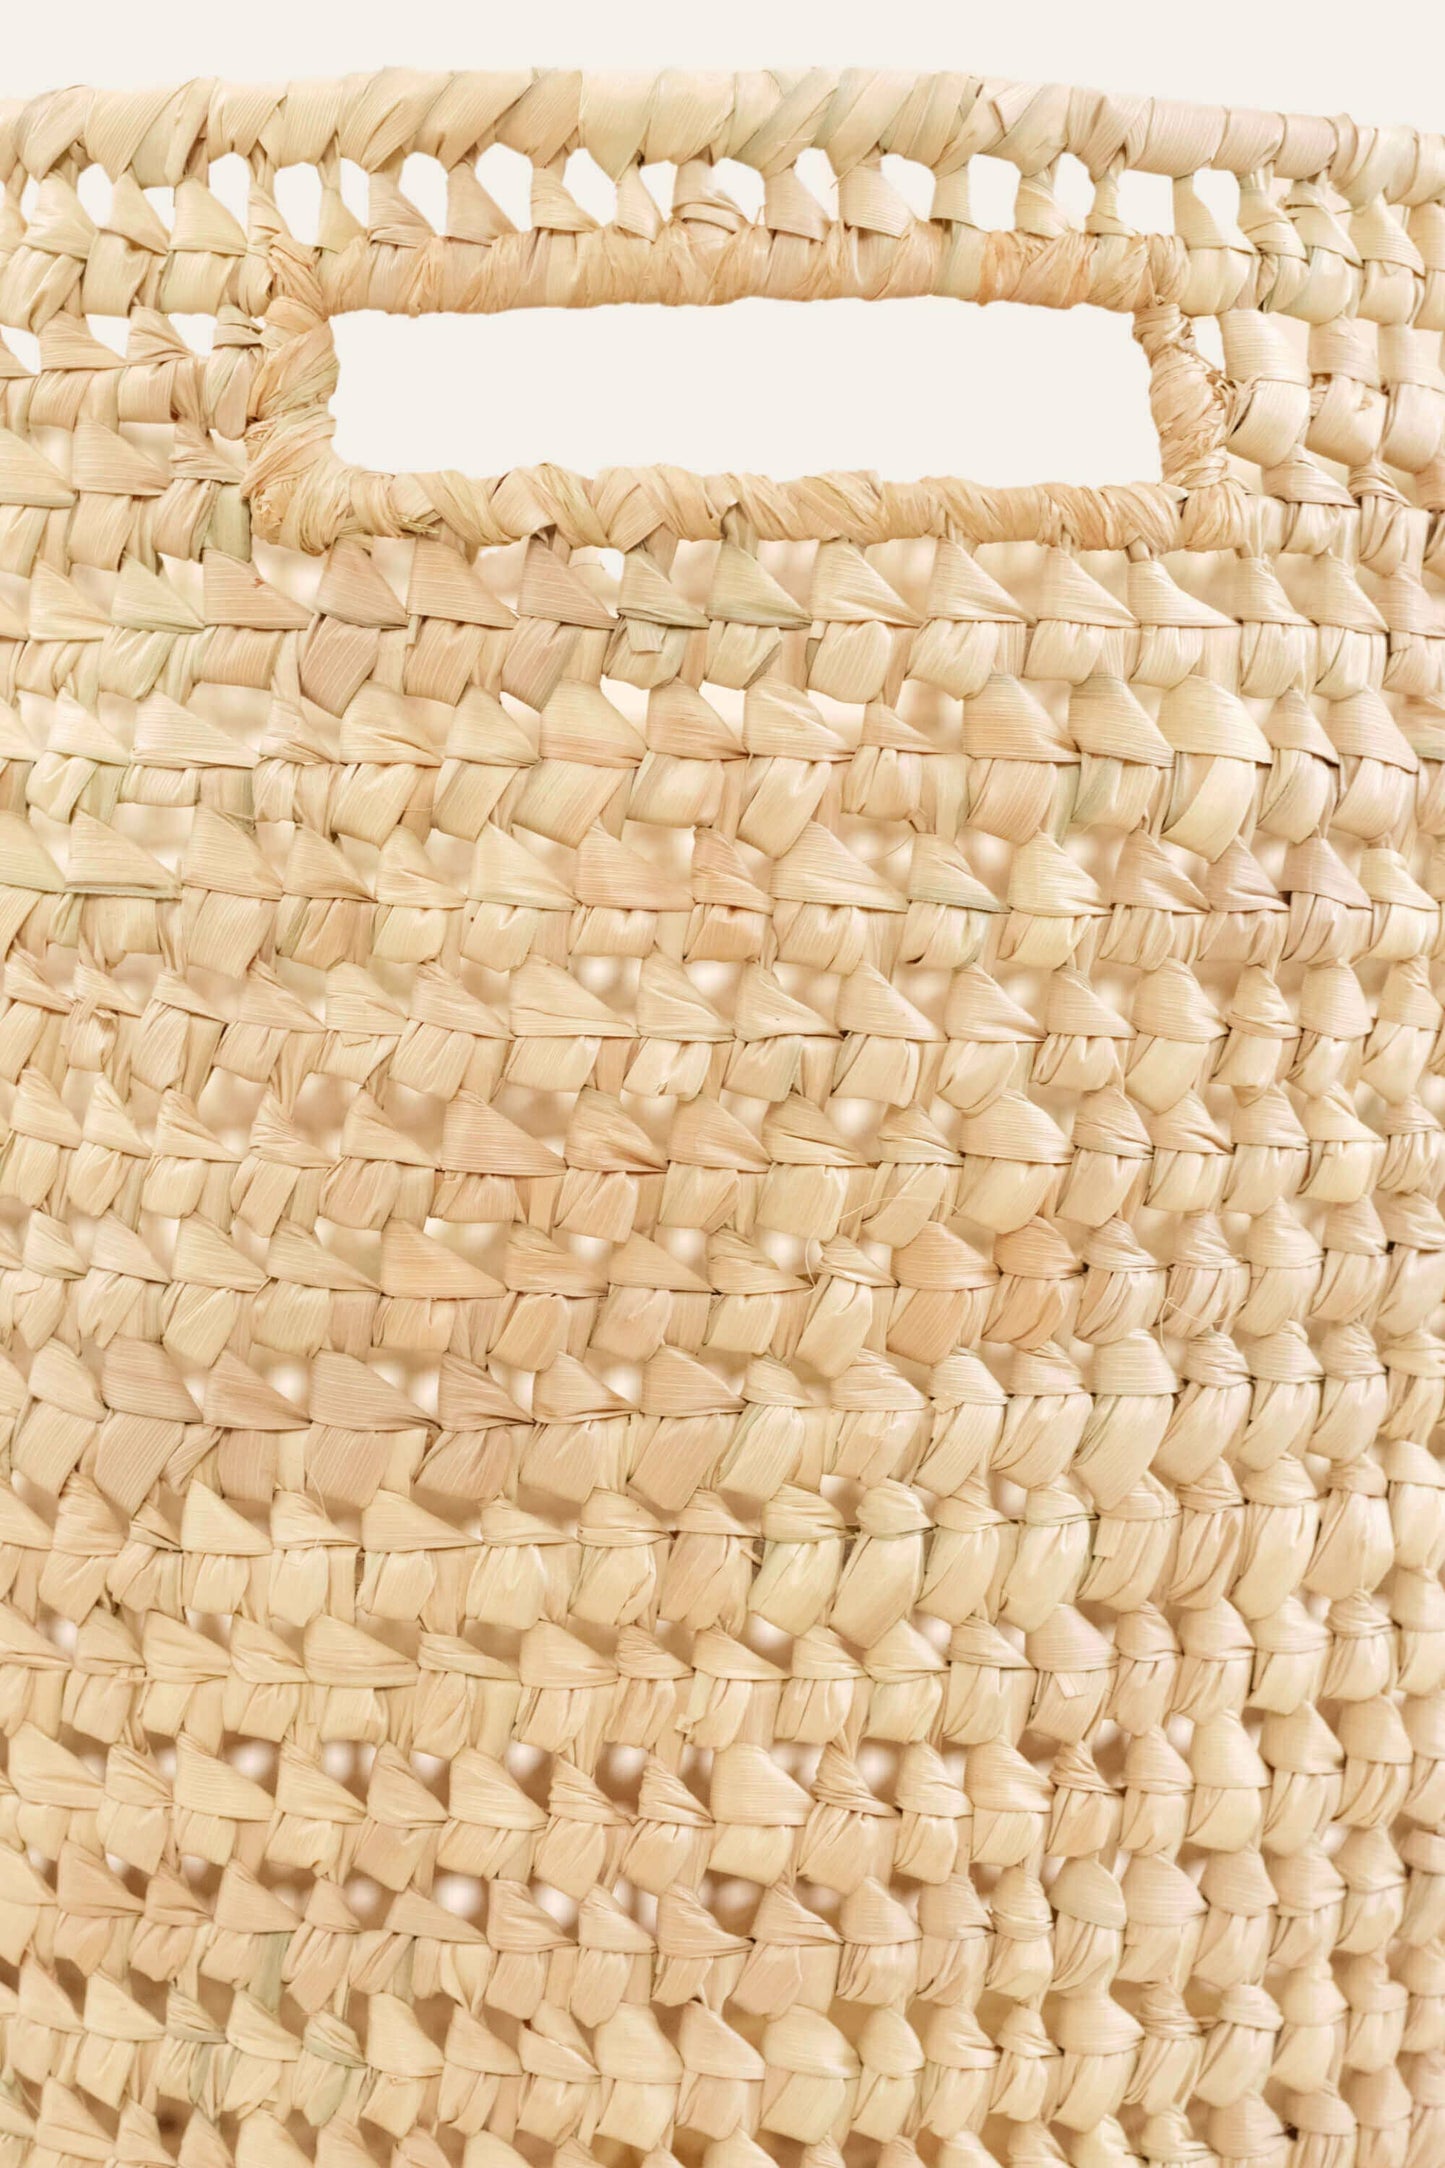 Indego Africa - Open Weave Palm Leaf Round Floor Basket with Handles